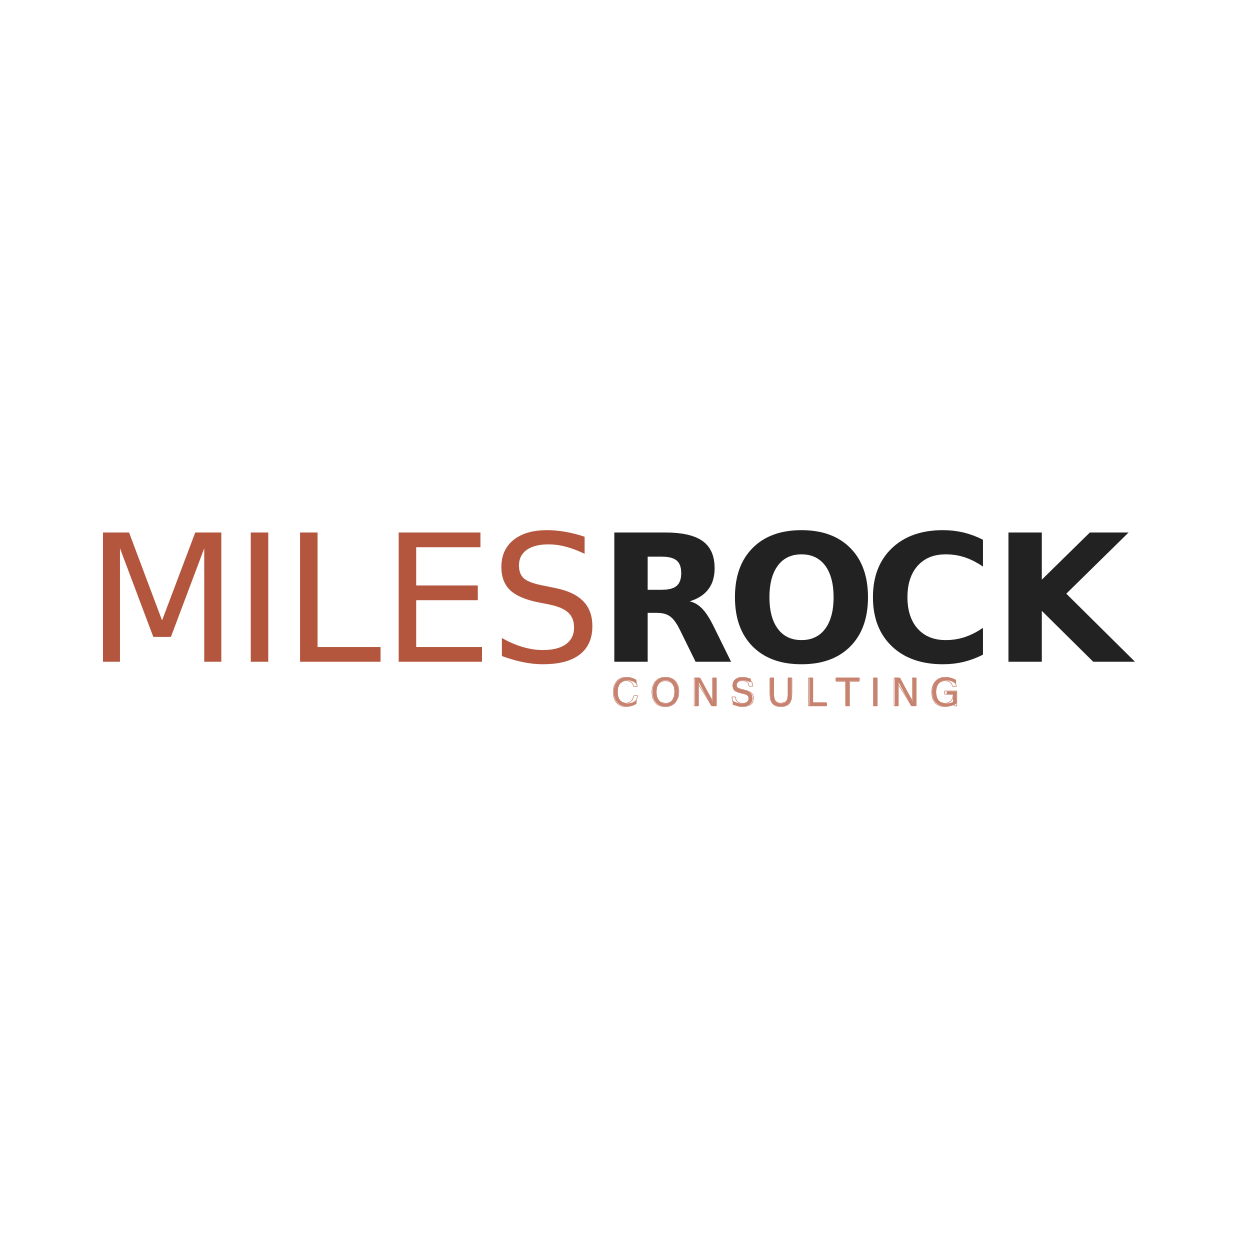 Milesrock